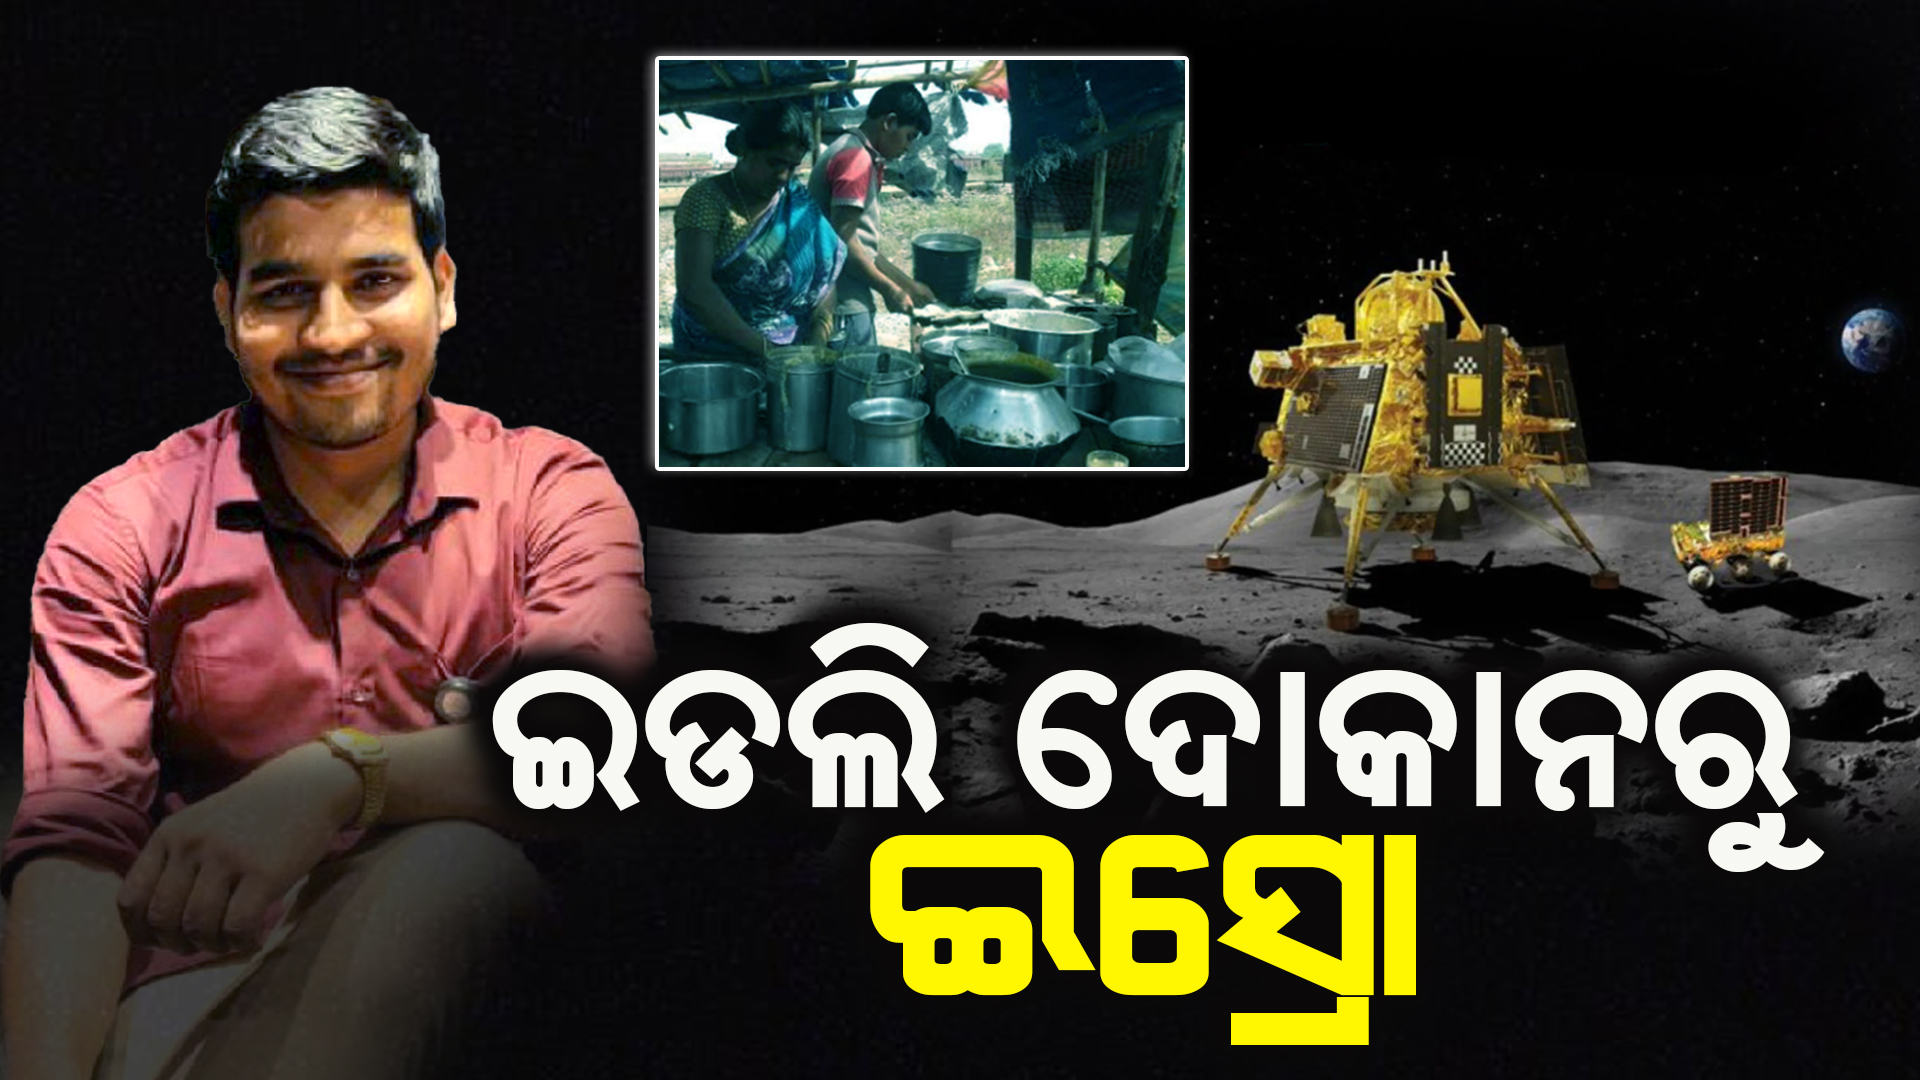 isro scientist chandrayaan 3, bharat kumar isro, chandrayaan 3 update, odia blog, rising odisha